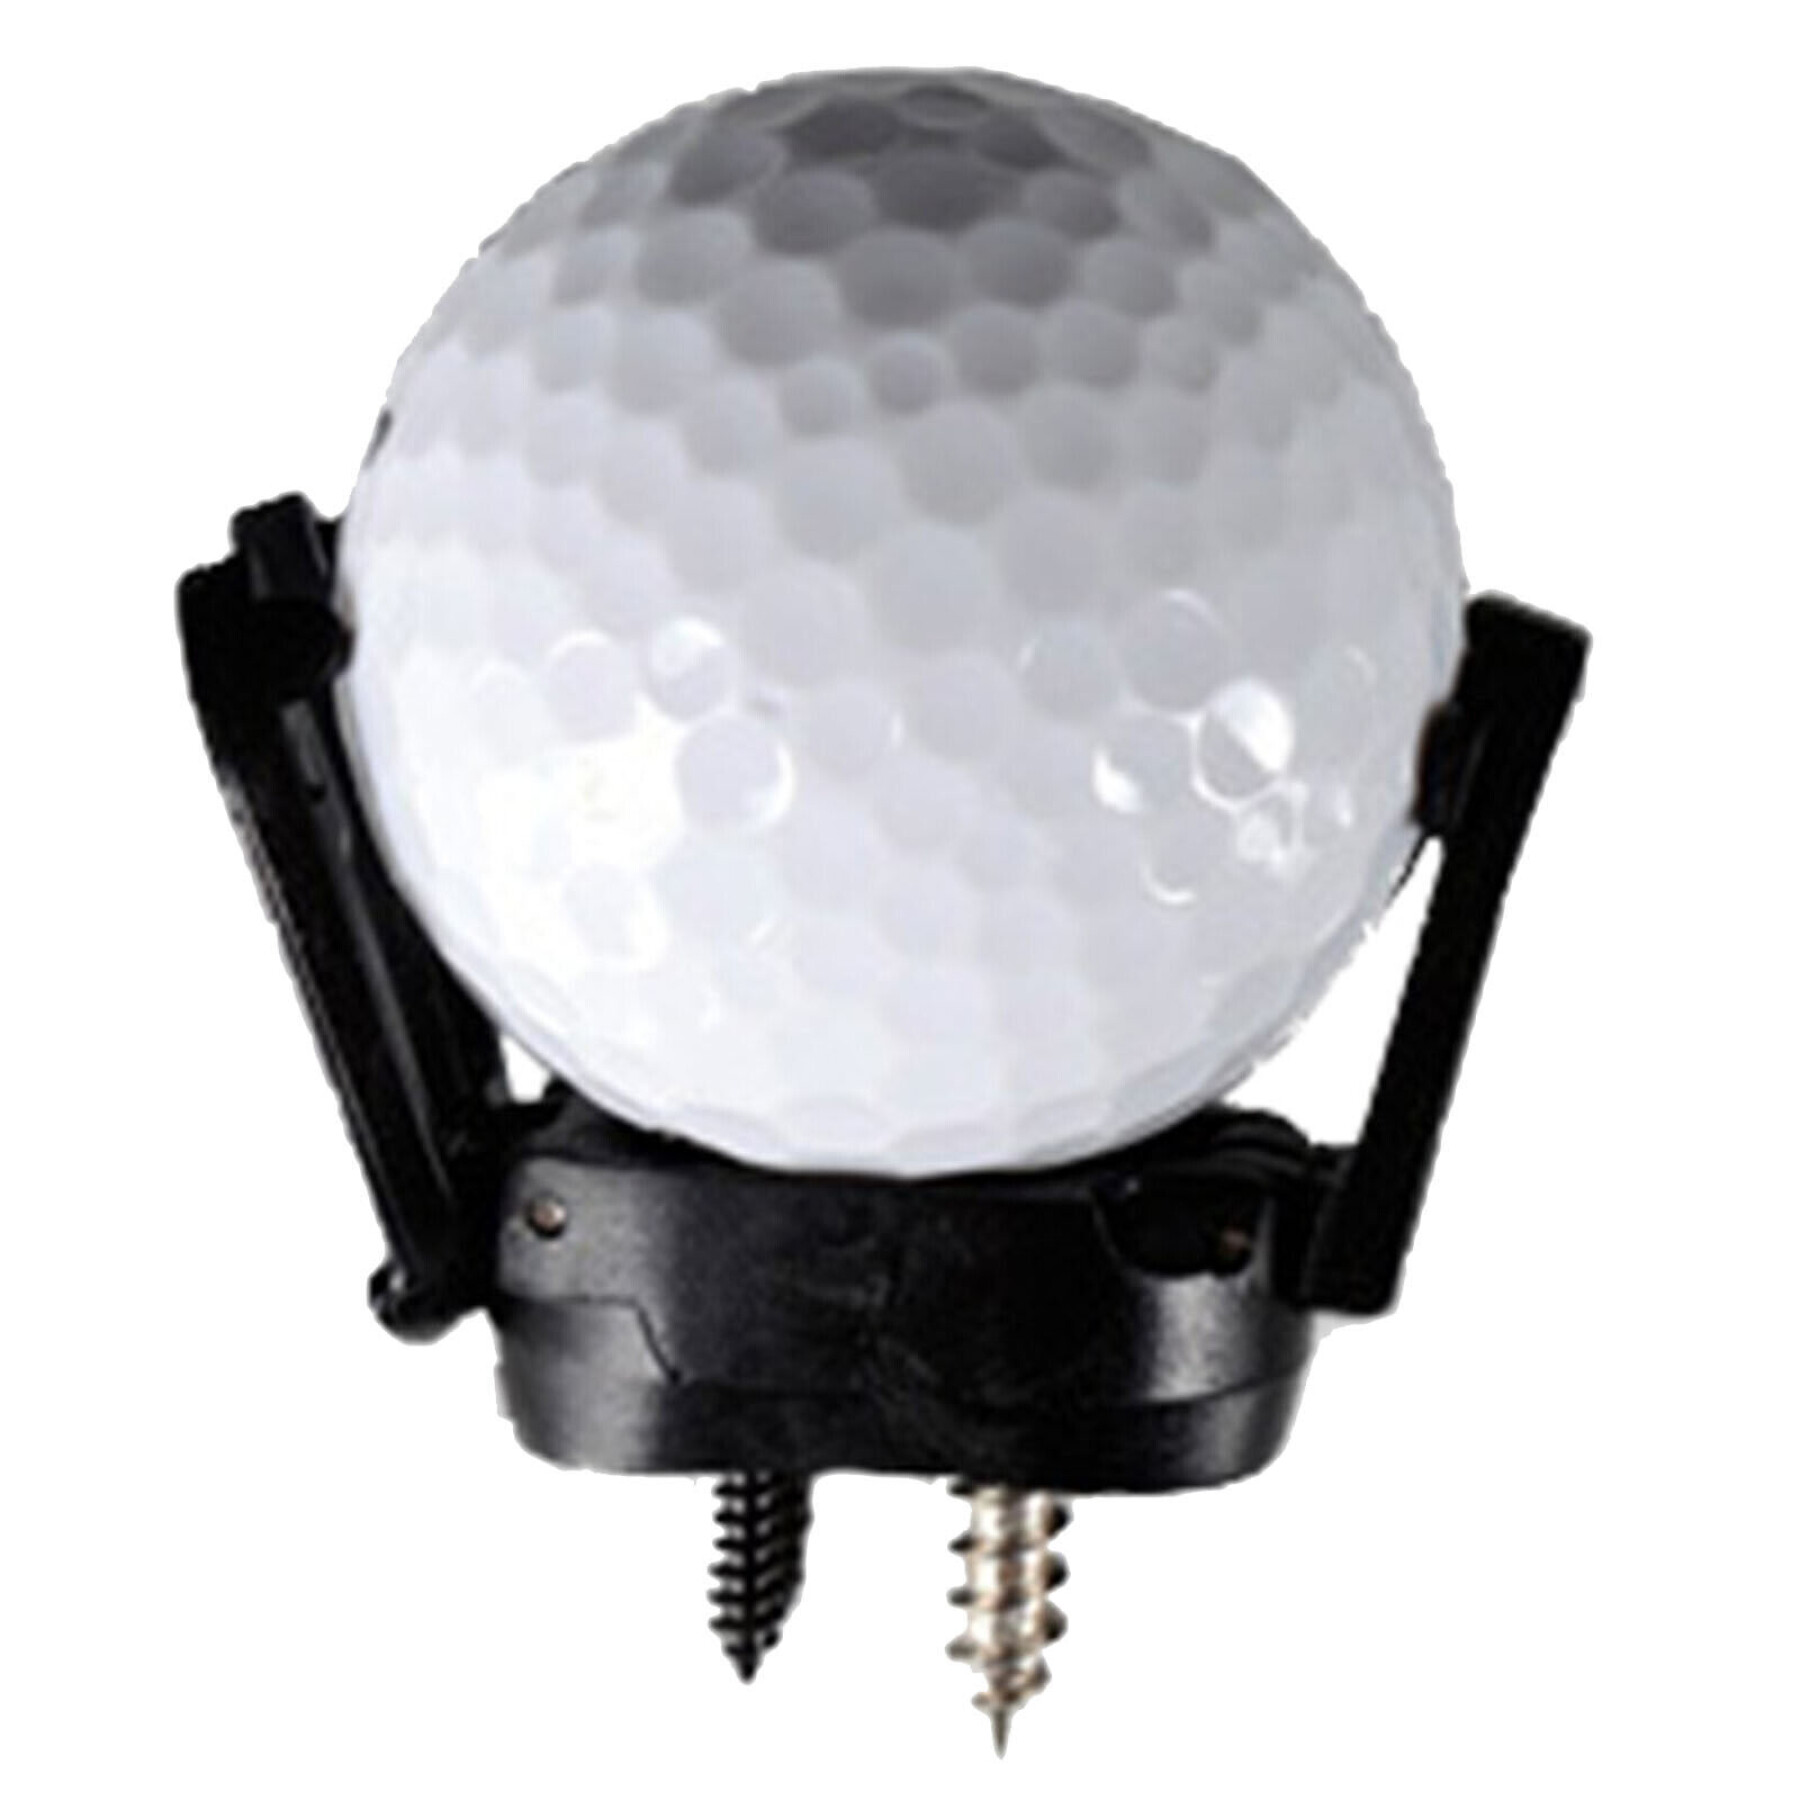 Golf ball collector with metal screws Legend